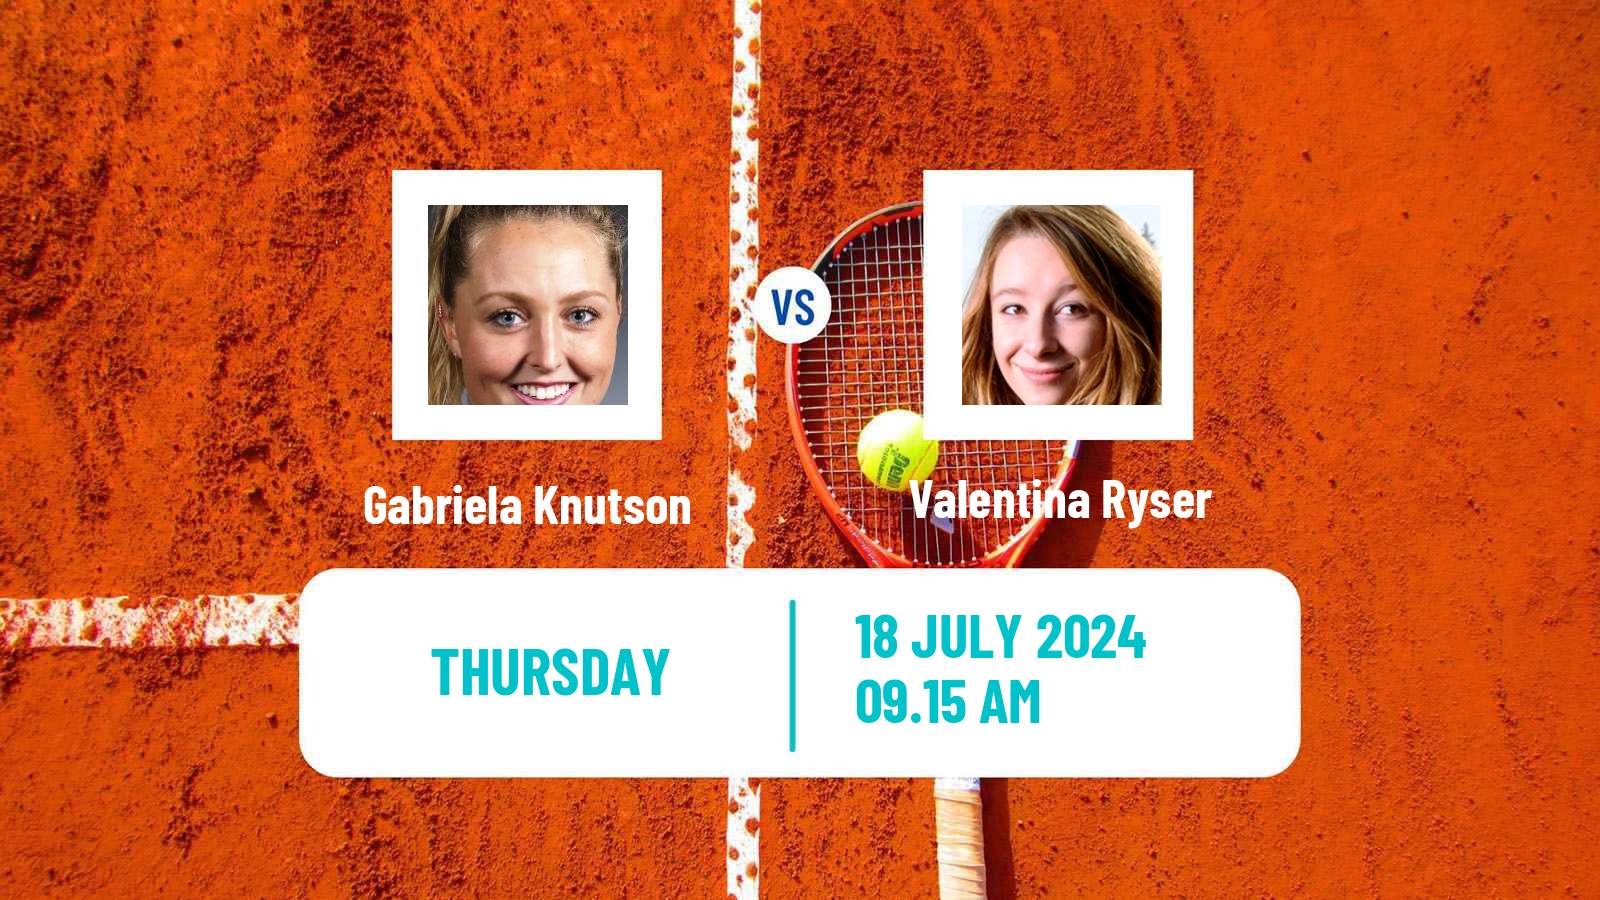 Tennis ITF W75 Porto 2 Women Gabriela Knutson - Valentina Ryser